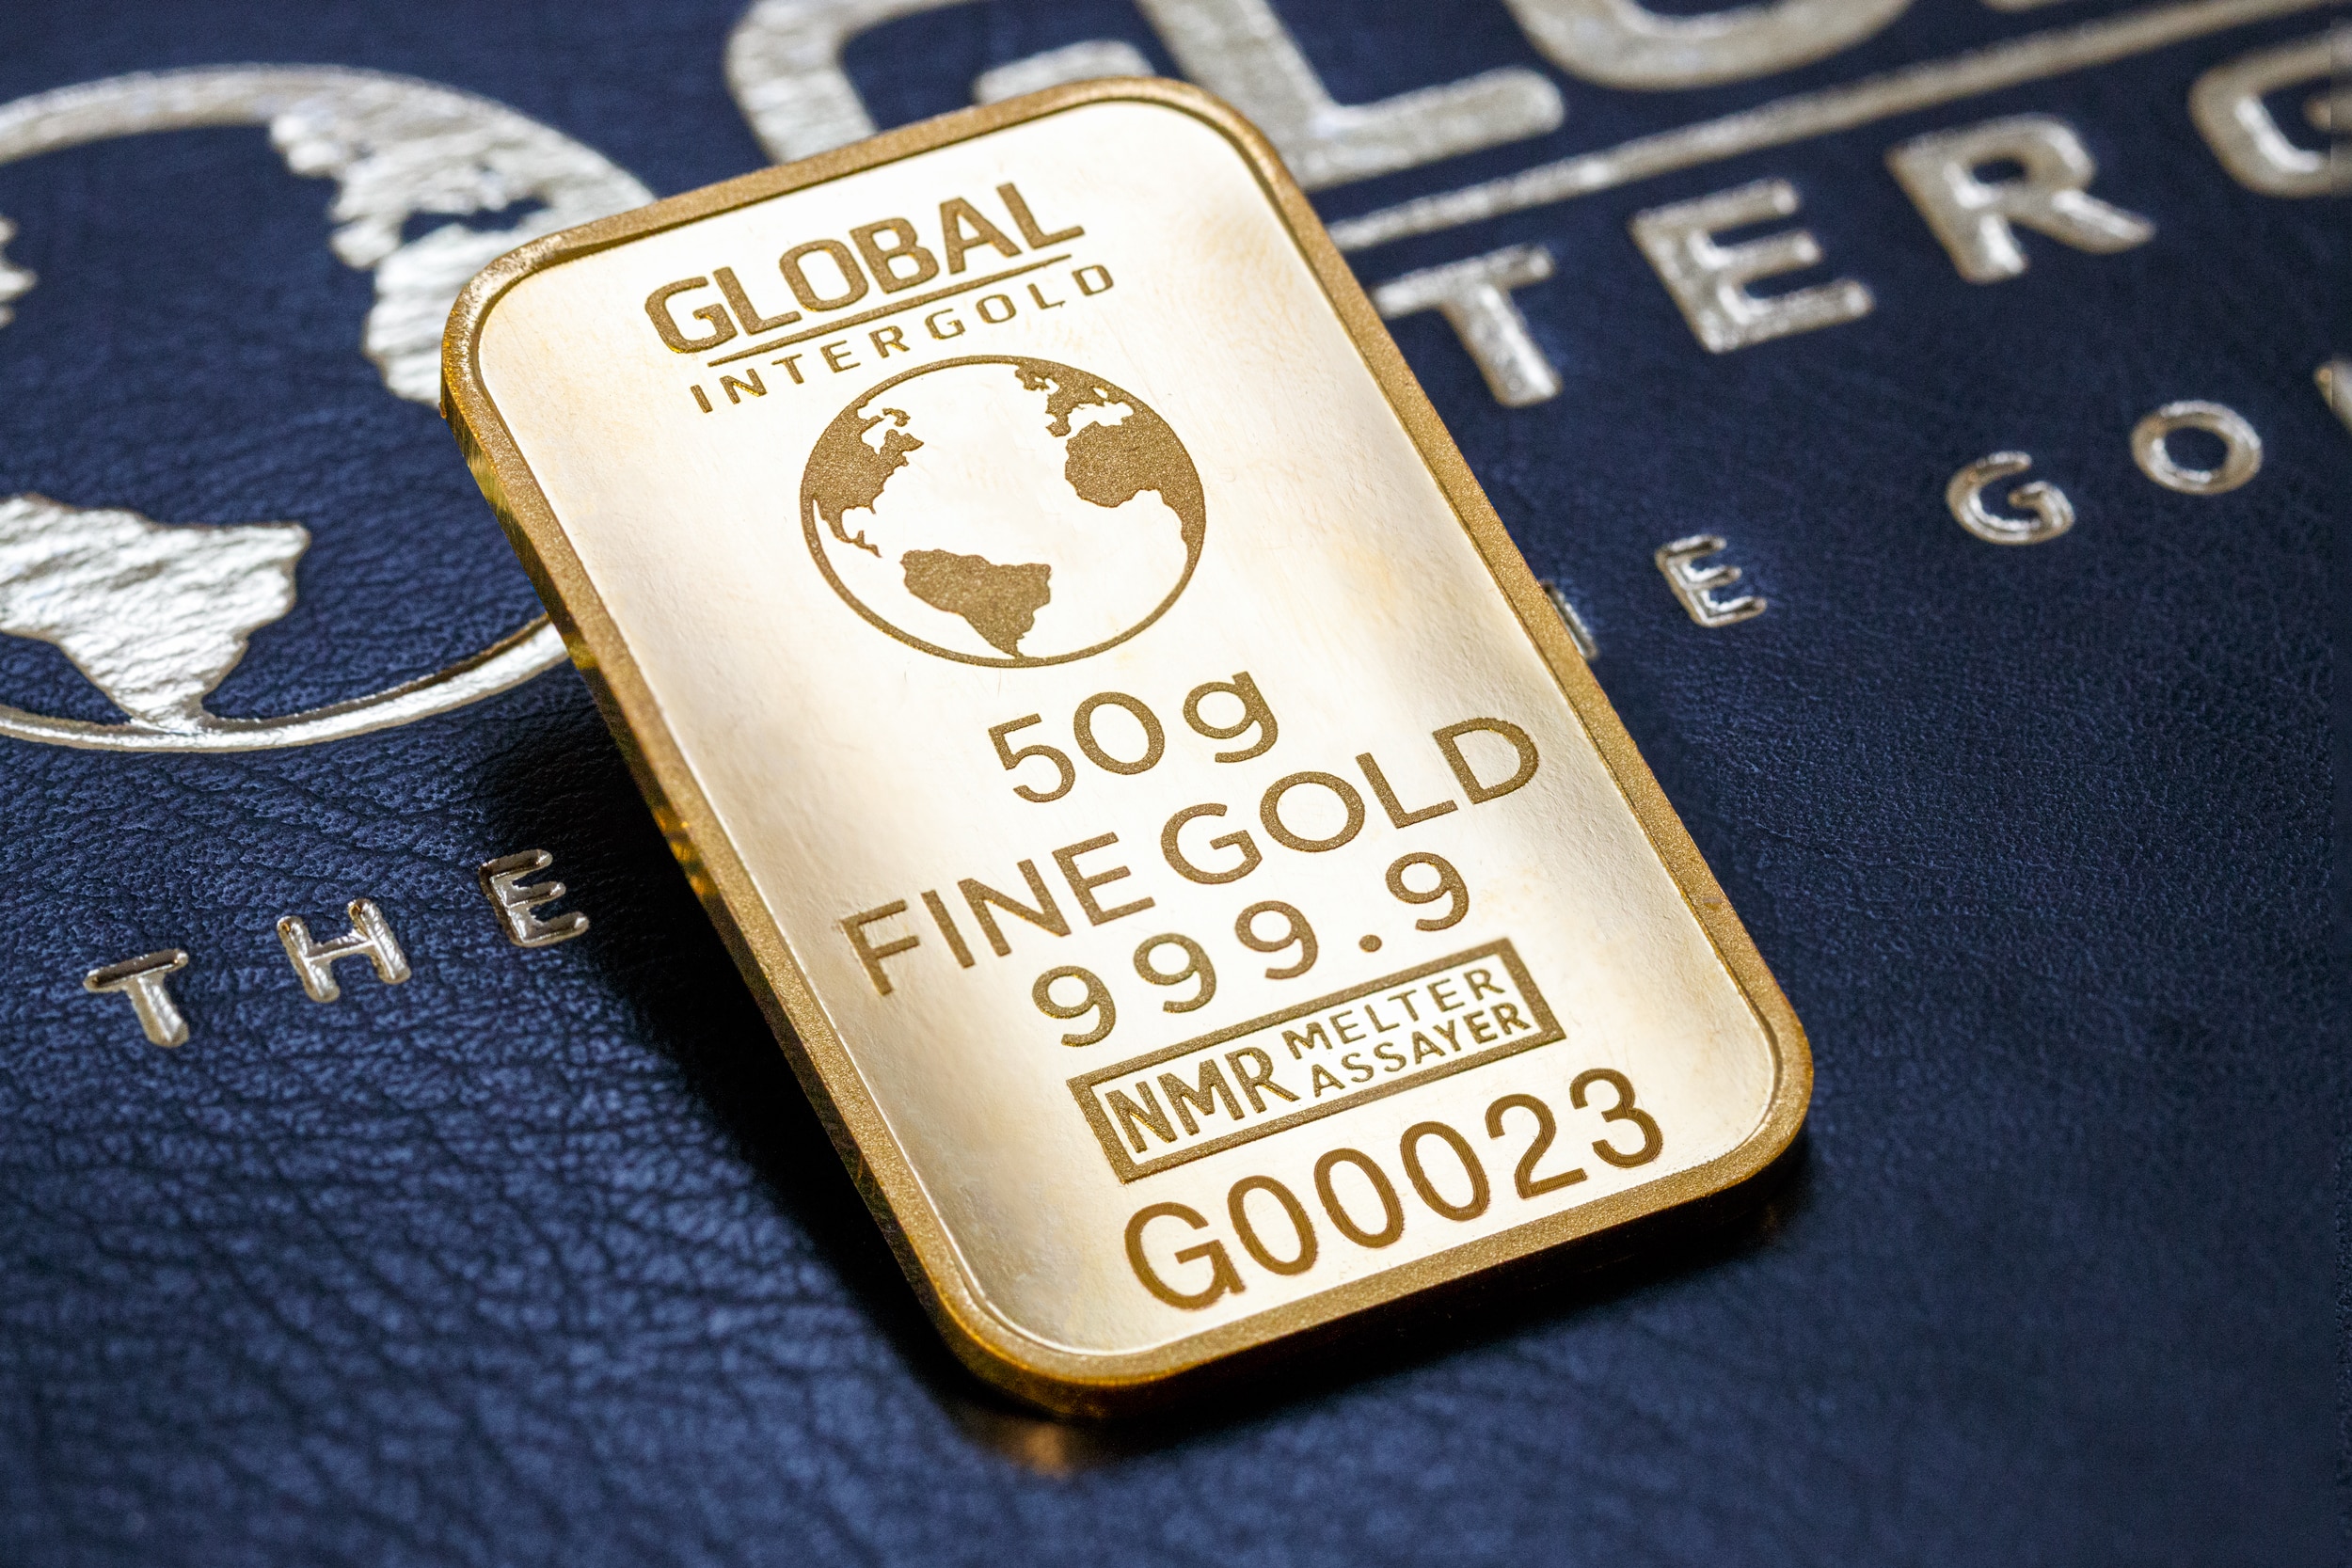 global 50g finegold